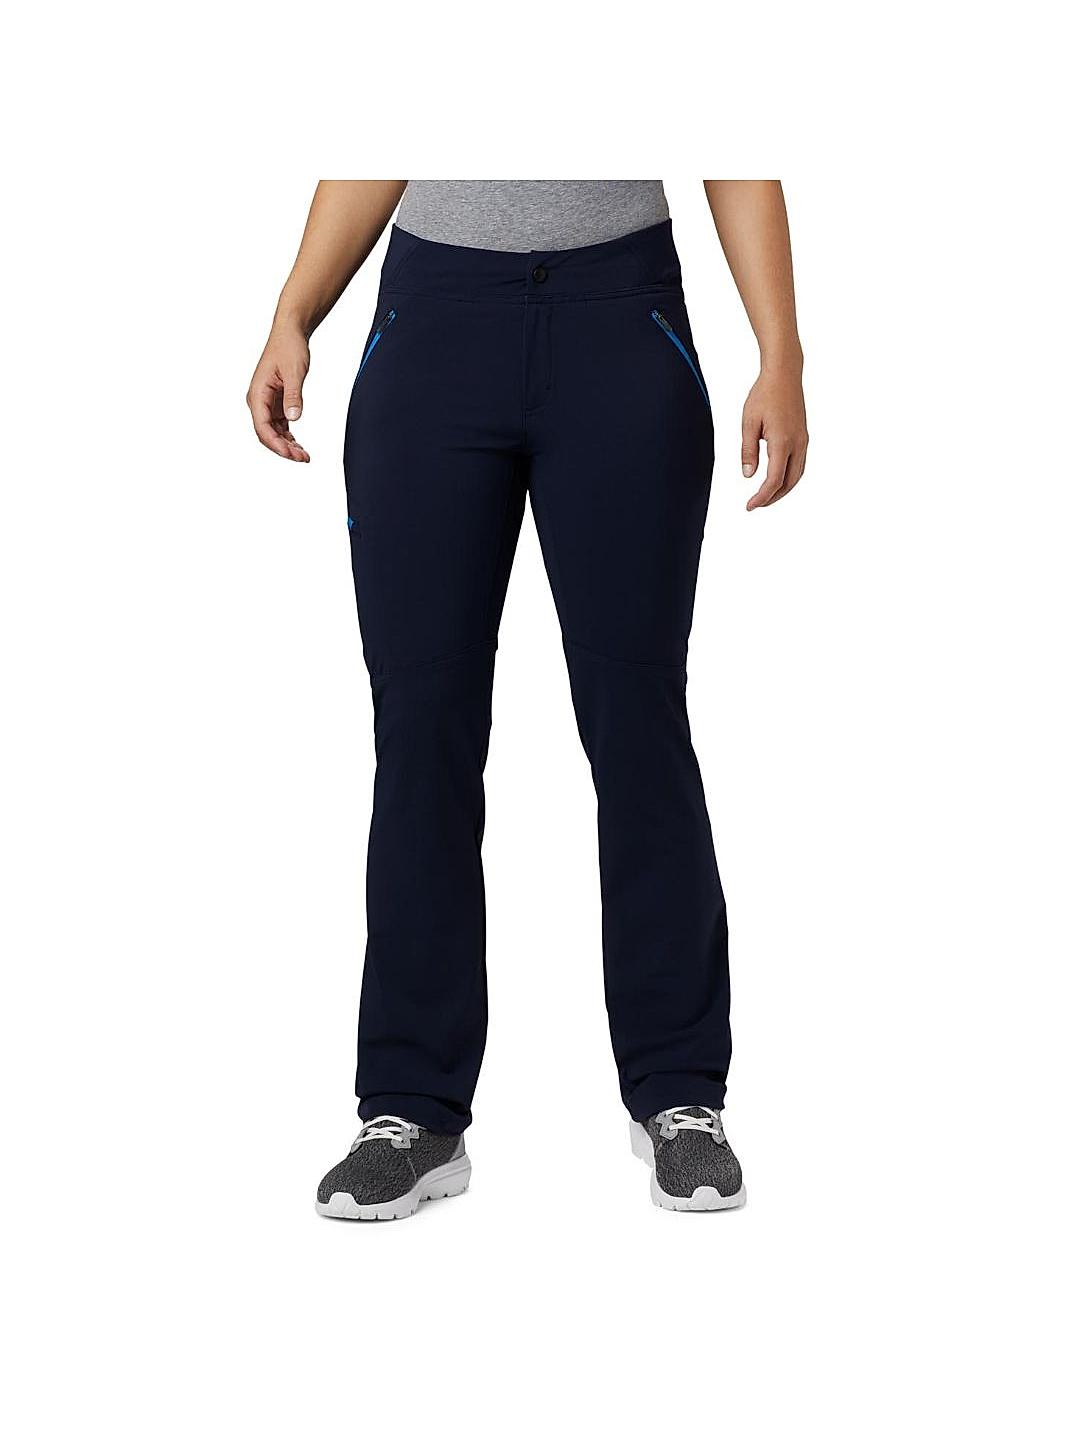 haxmnou women's h print ripped stretch cute jeans skinny slim fit  distressed destroyed lifting curvy denim pants blue m - Walmart.com